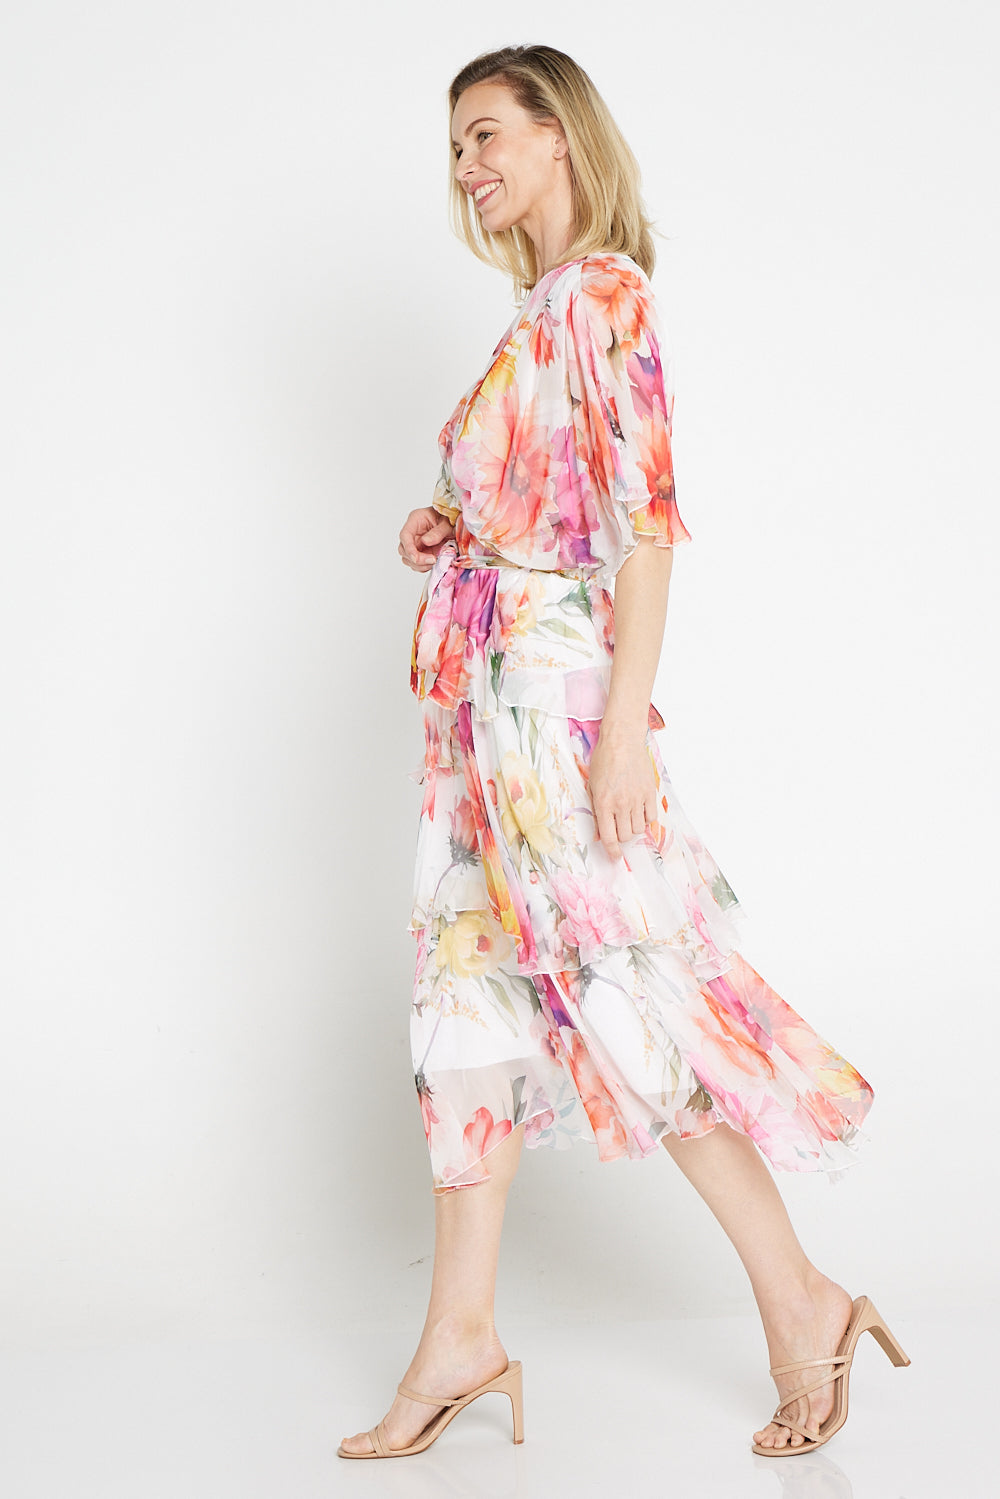 Estelle Chiffon Dress - Floral Harmony